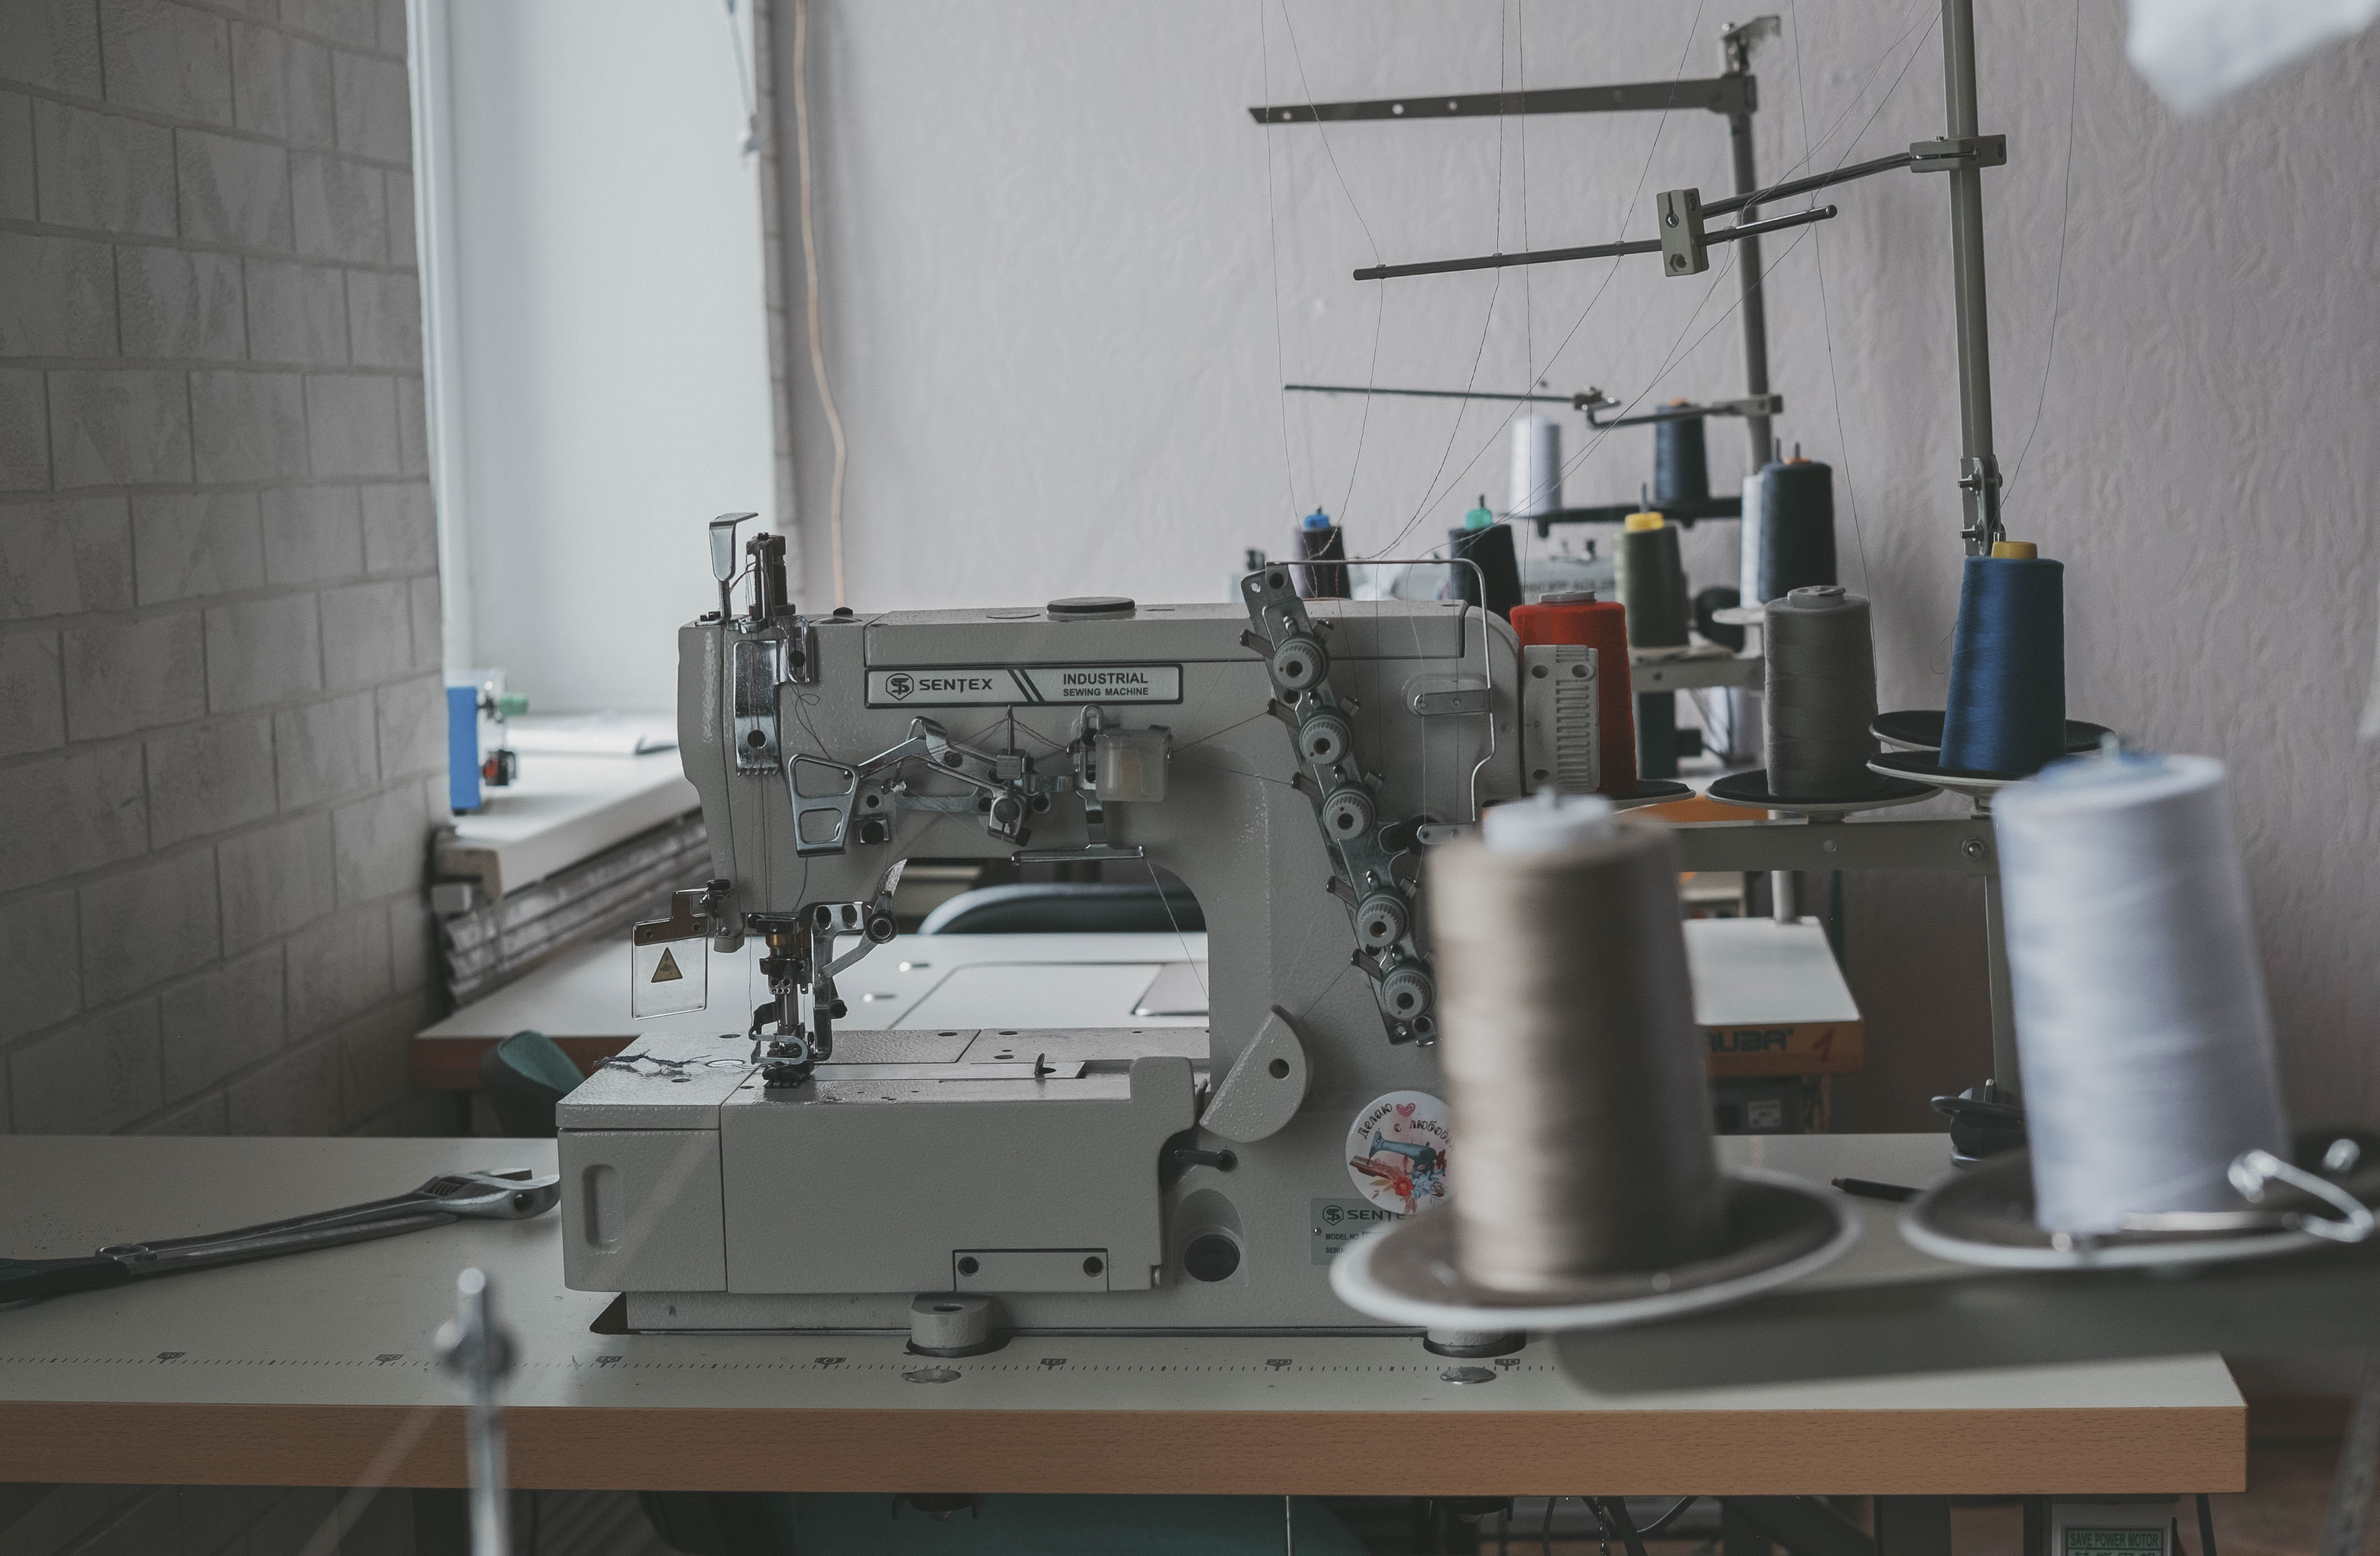 Retro sewing mashine